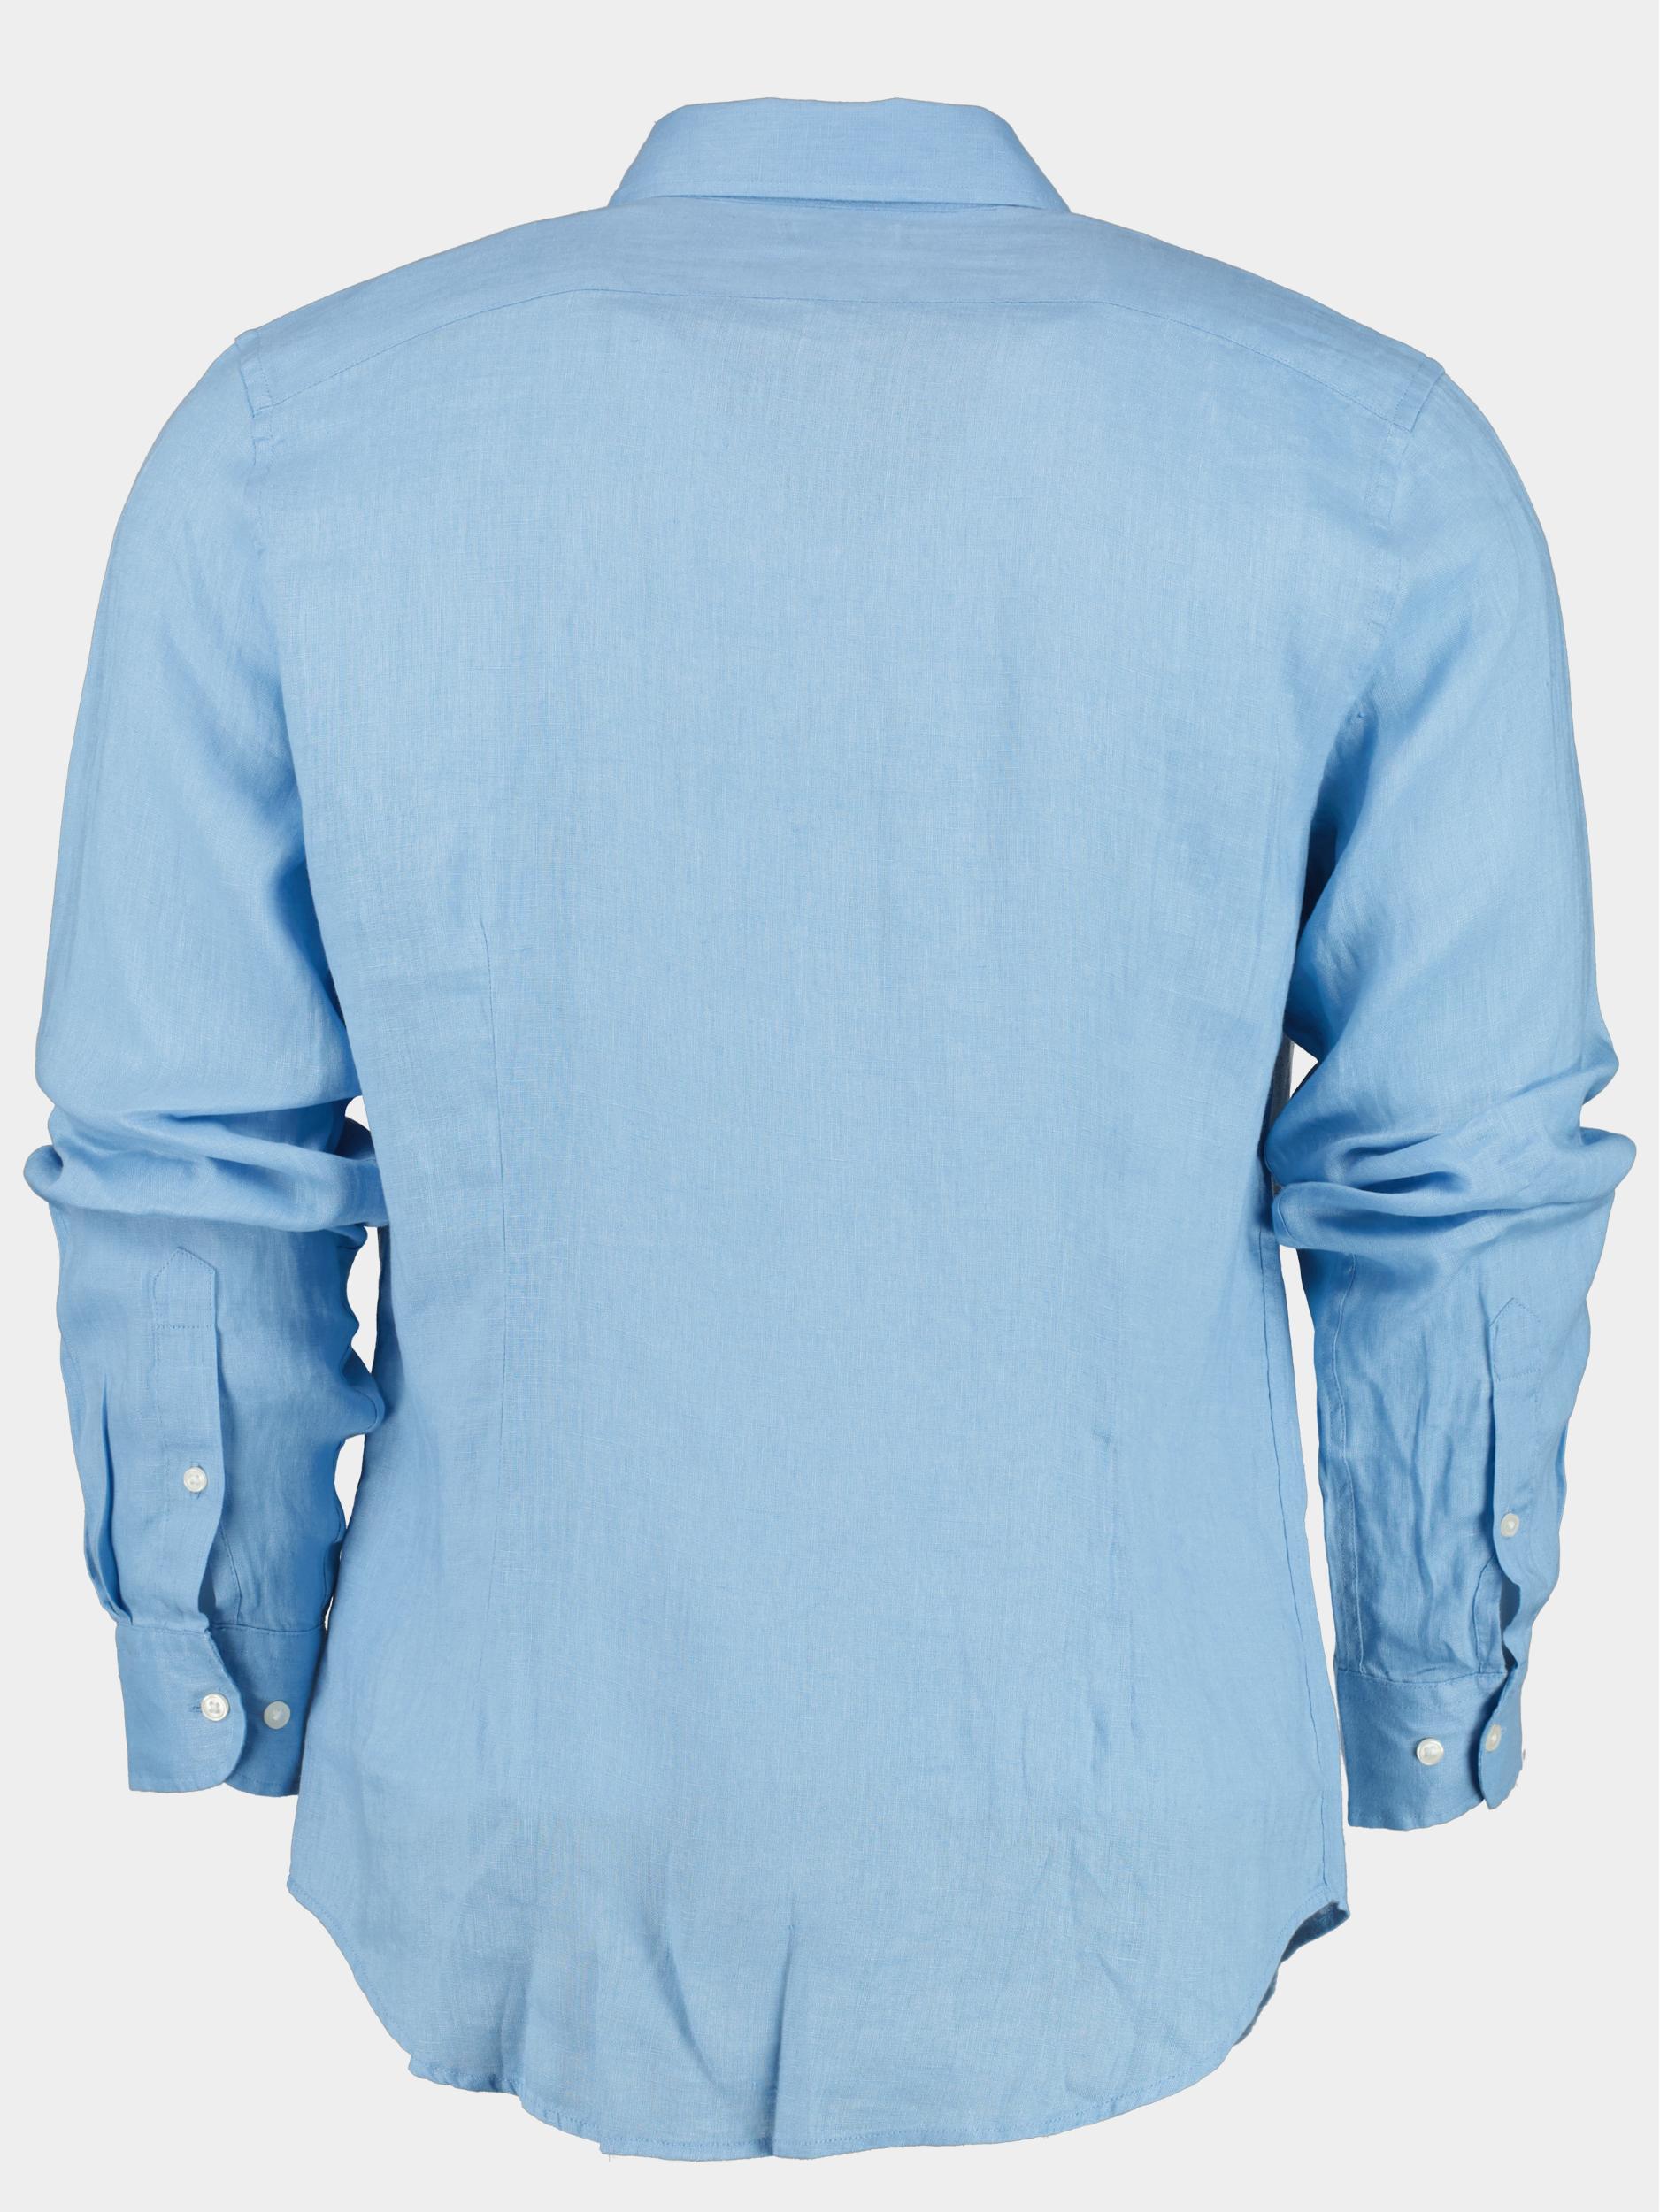 Bos Bright Blue Casual hemd lange mouw Blauw Linnen shirt slim fit 9435900/240